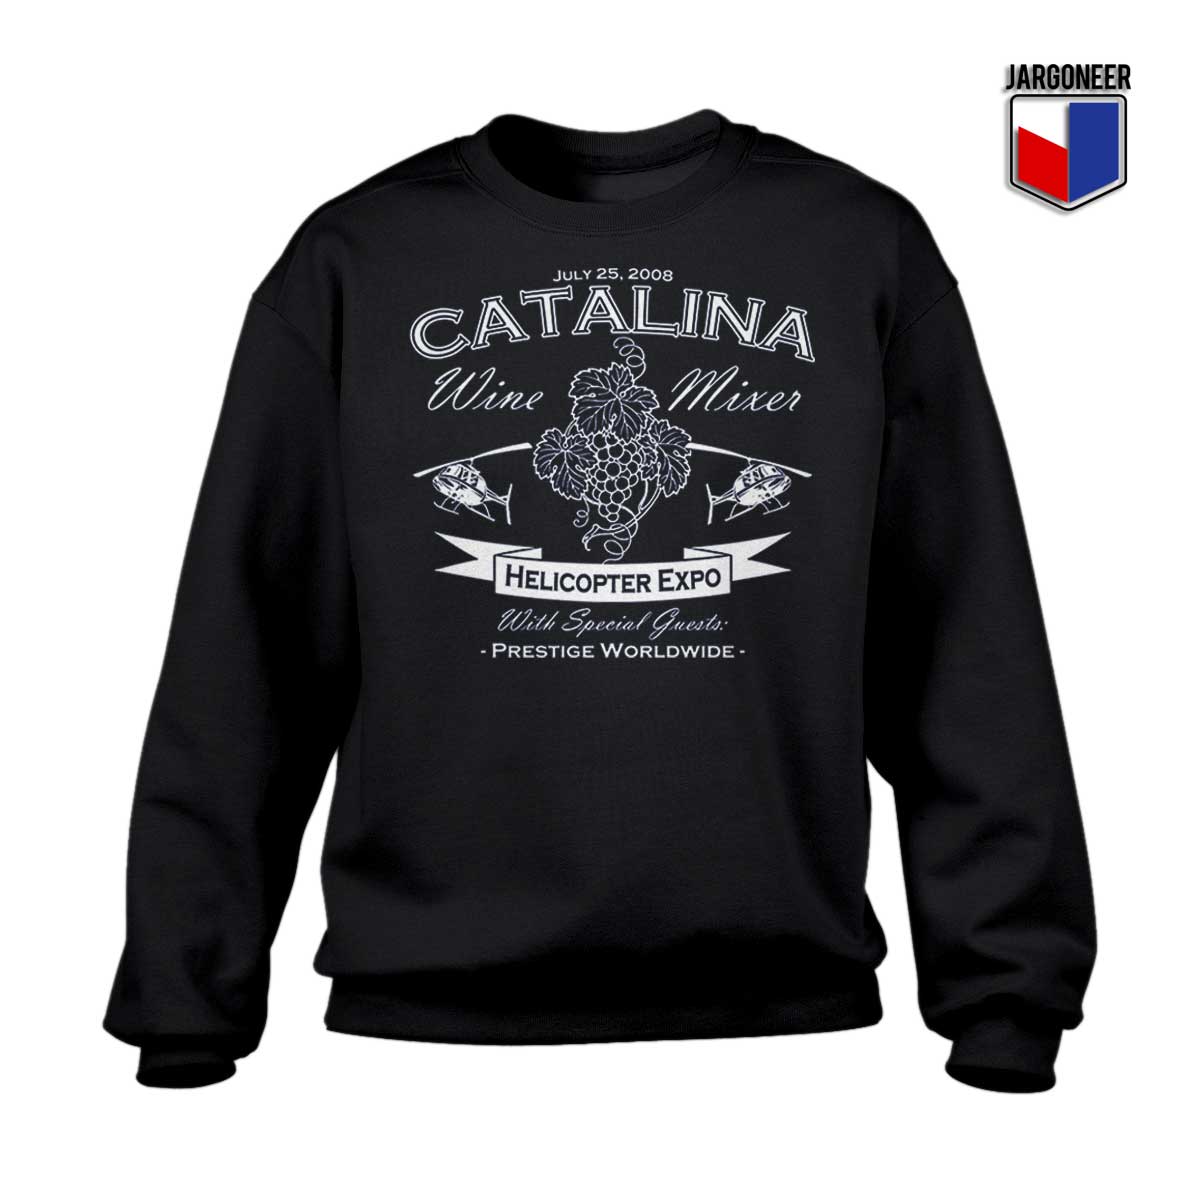 Catalina Wine Mixer Sweatshirt - Shop Unique Graphic Cool Shirt Designs